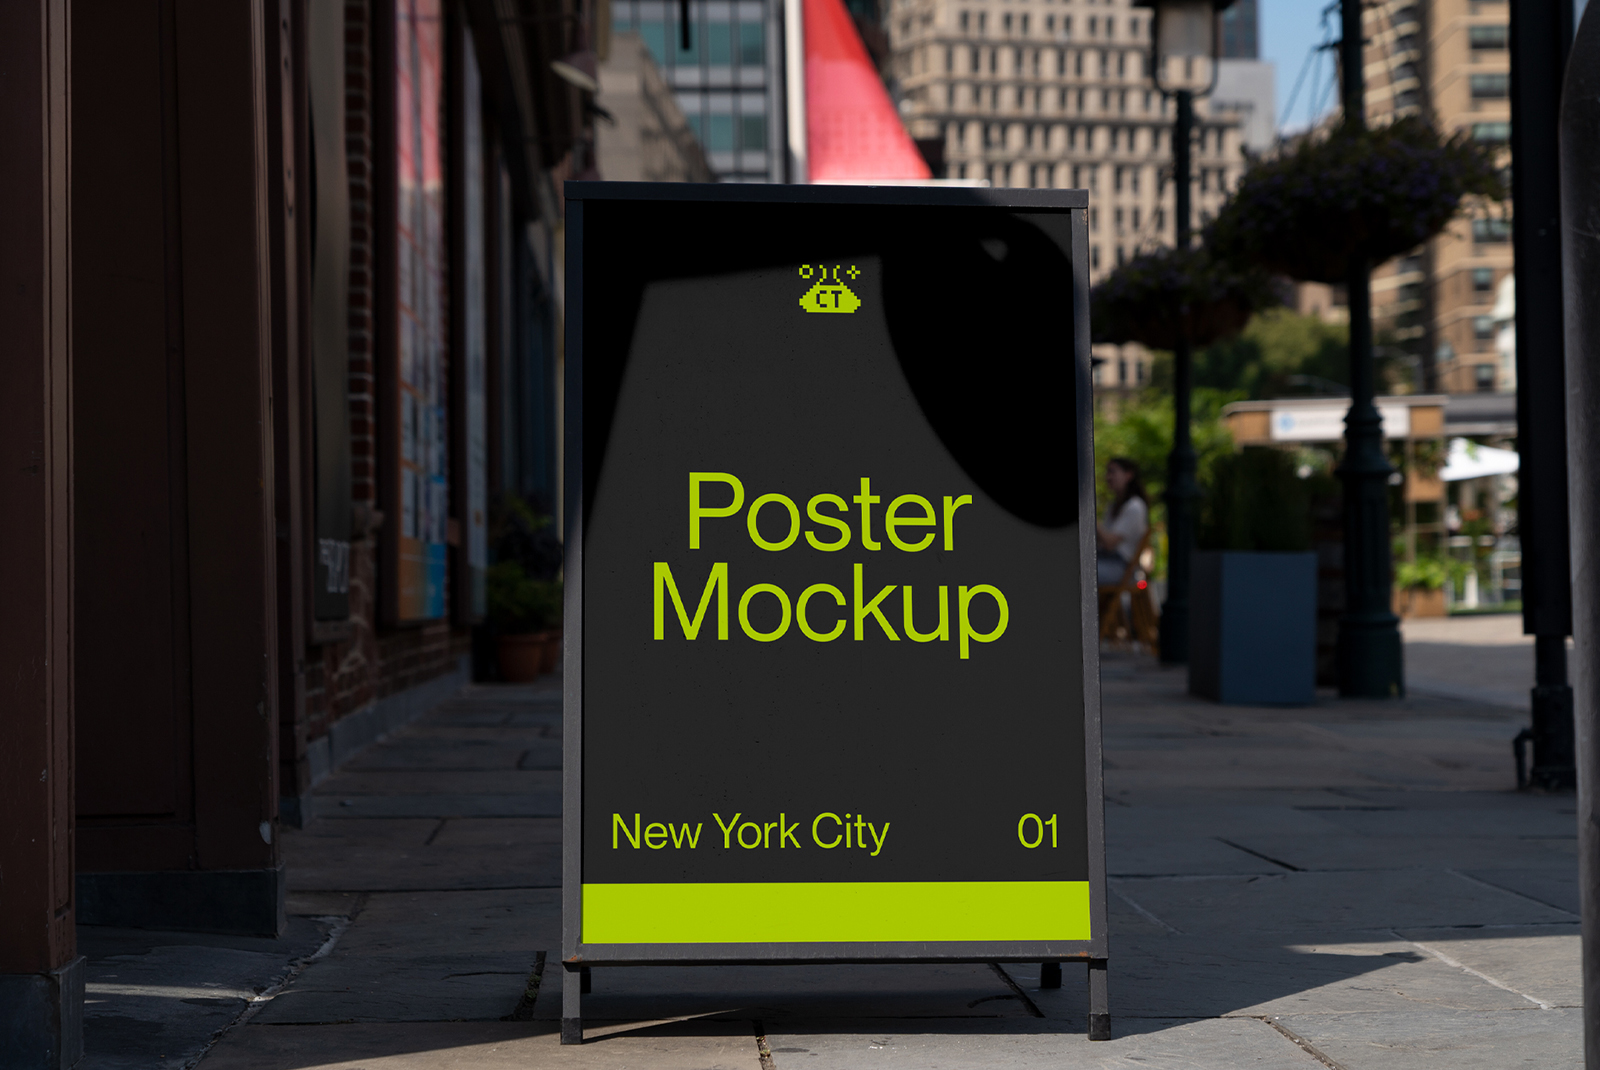 Outdoor poster mockup in urban environment for designers, editable digital asset, sidewalk advertising display near street, realistic design template.